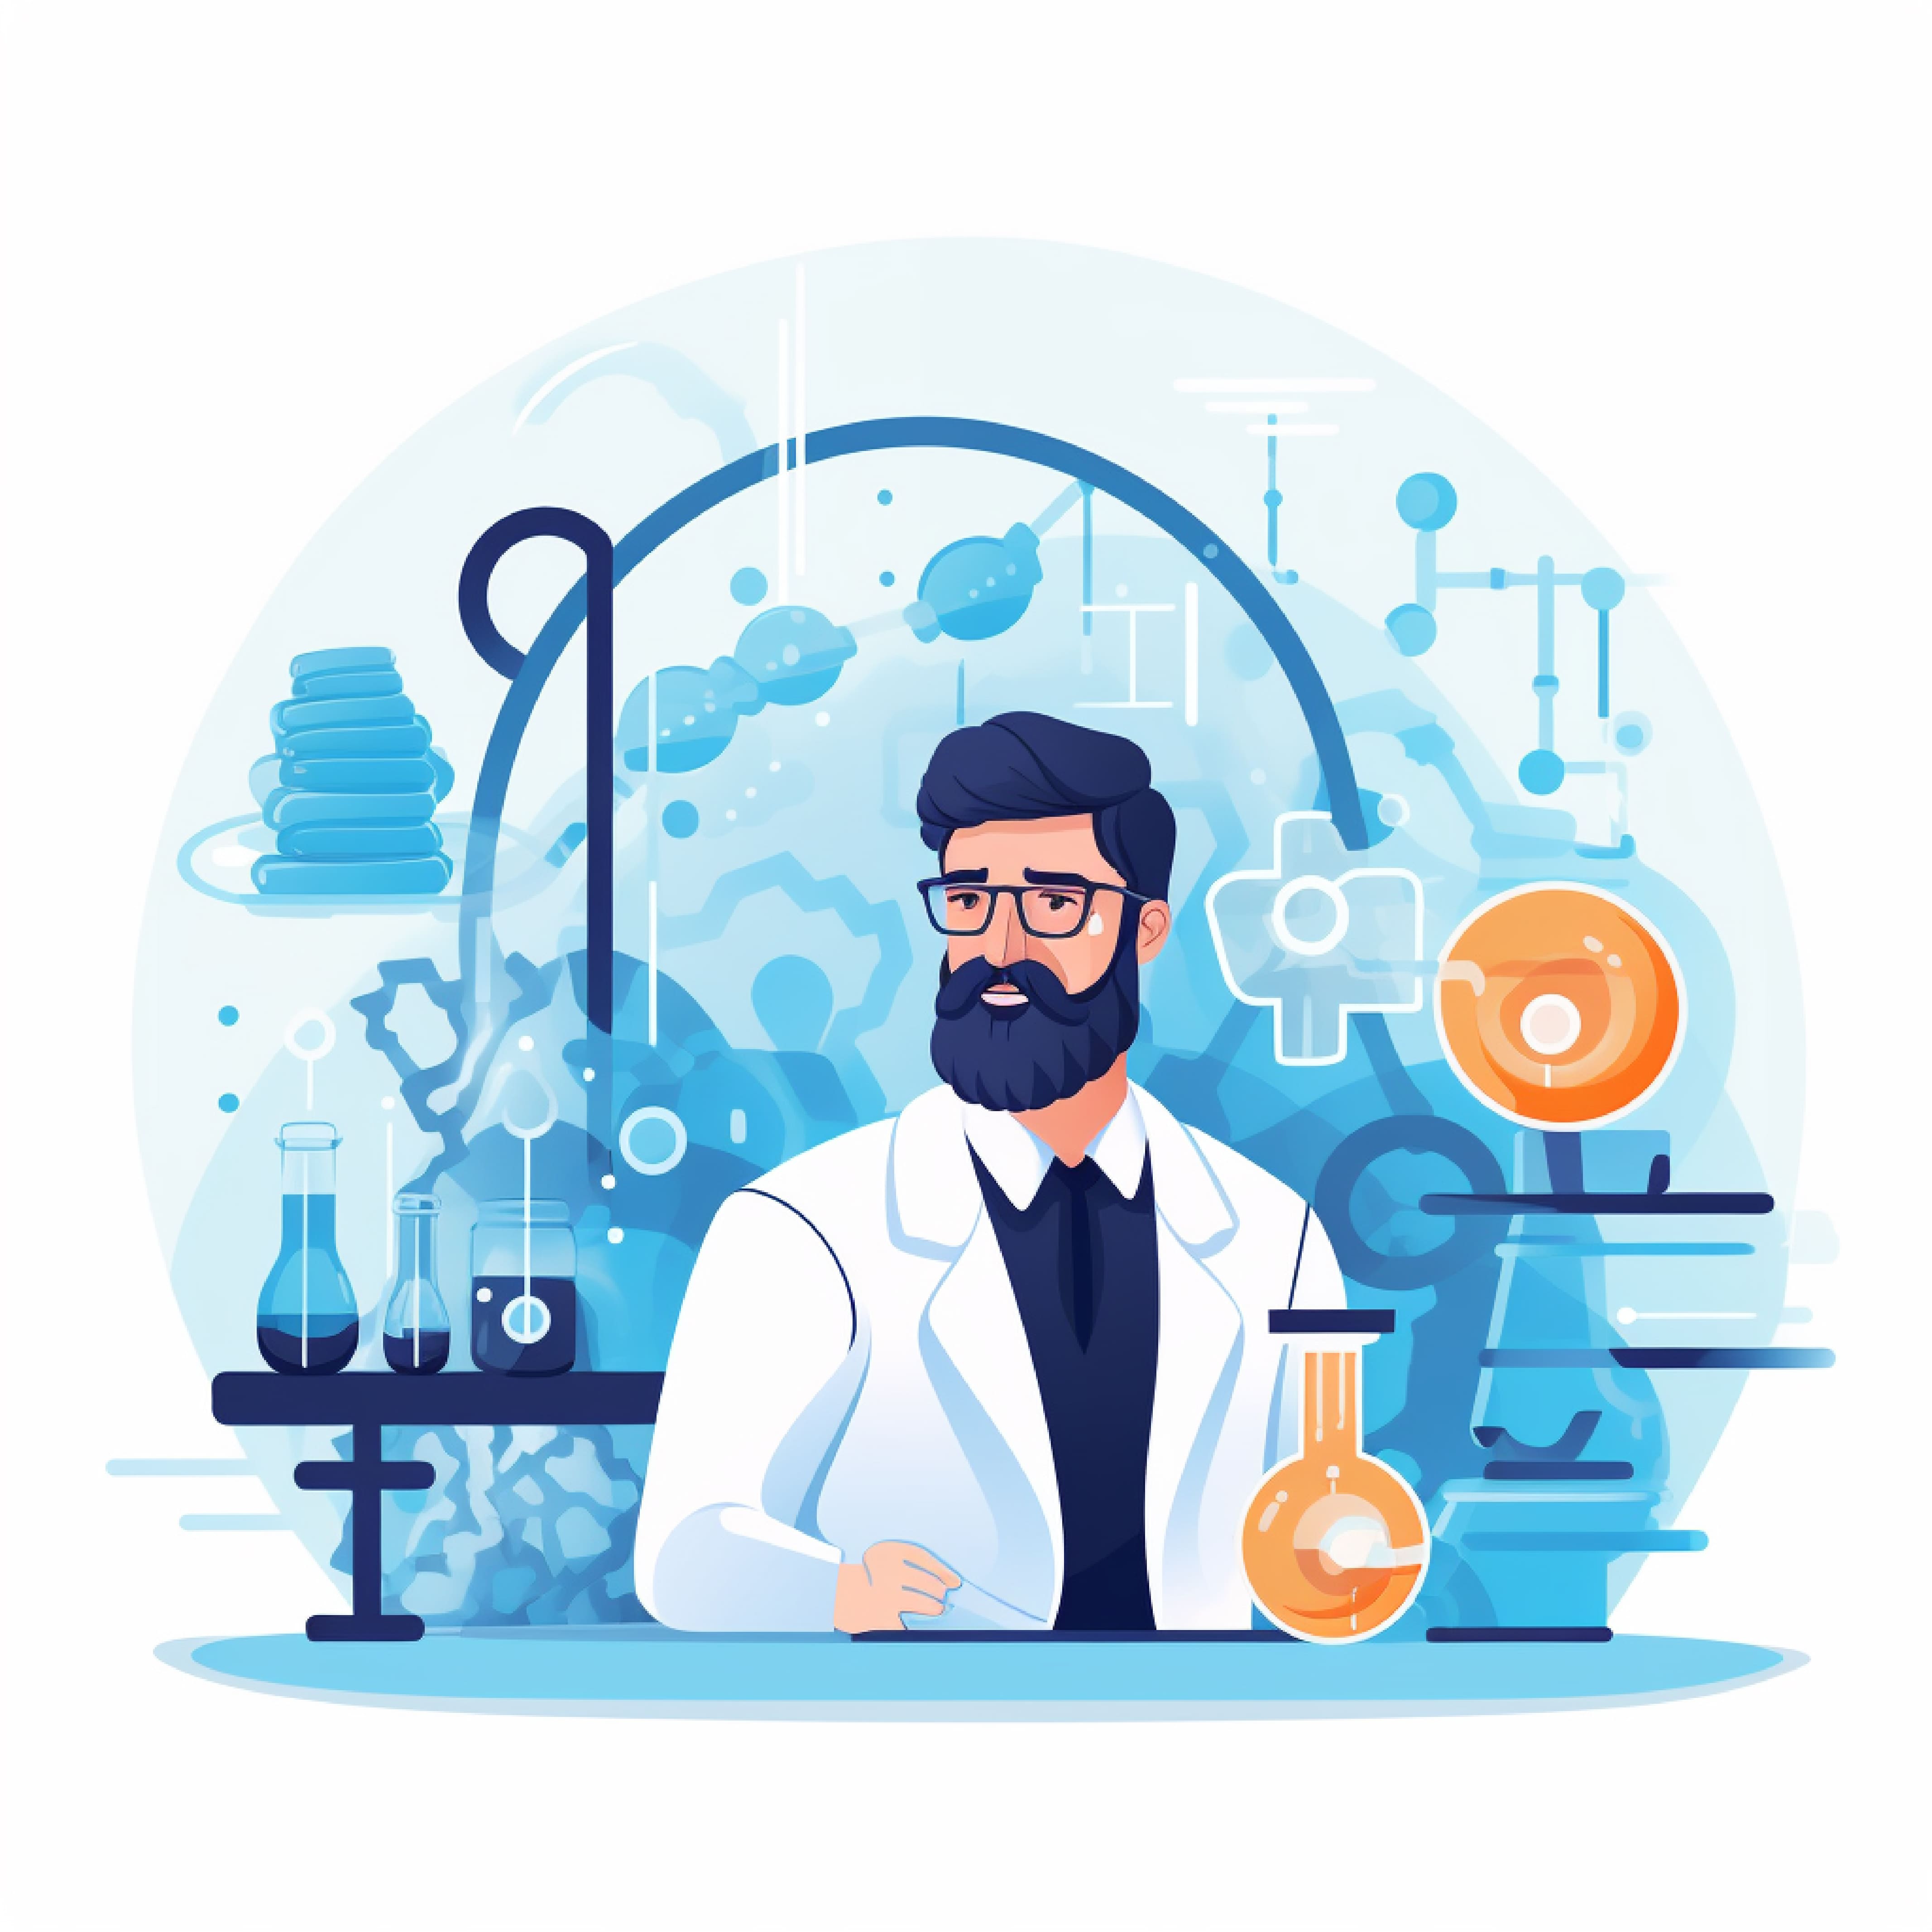 Medical Scientist